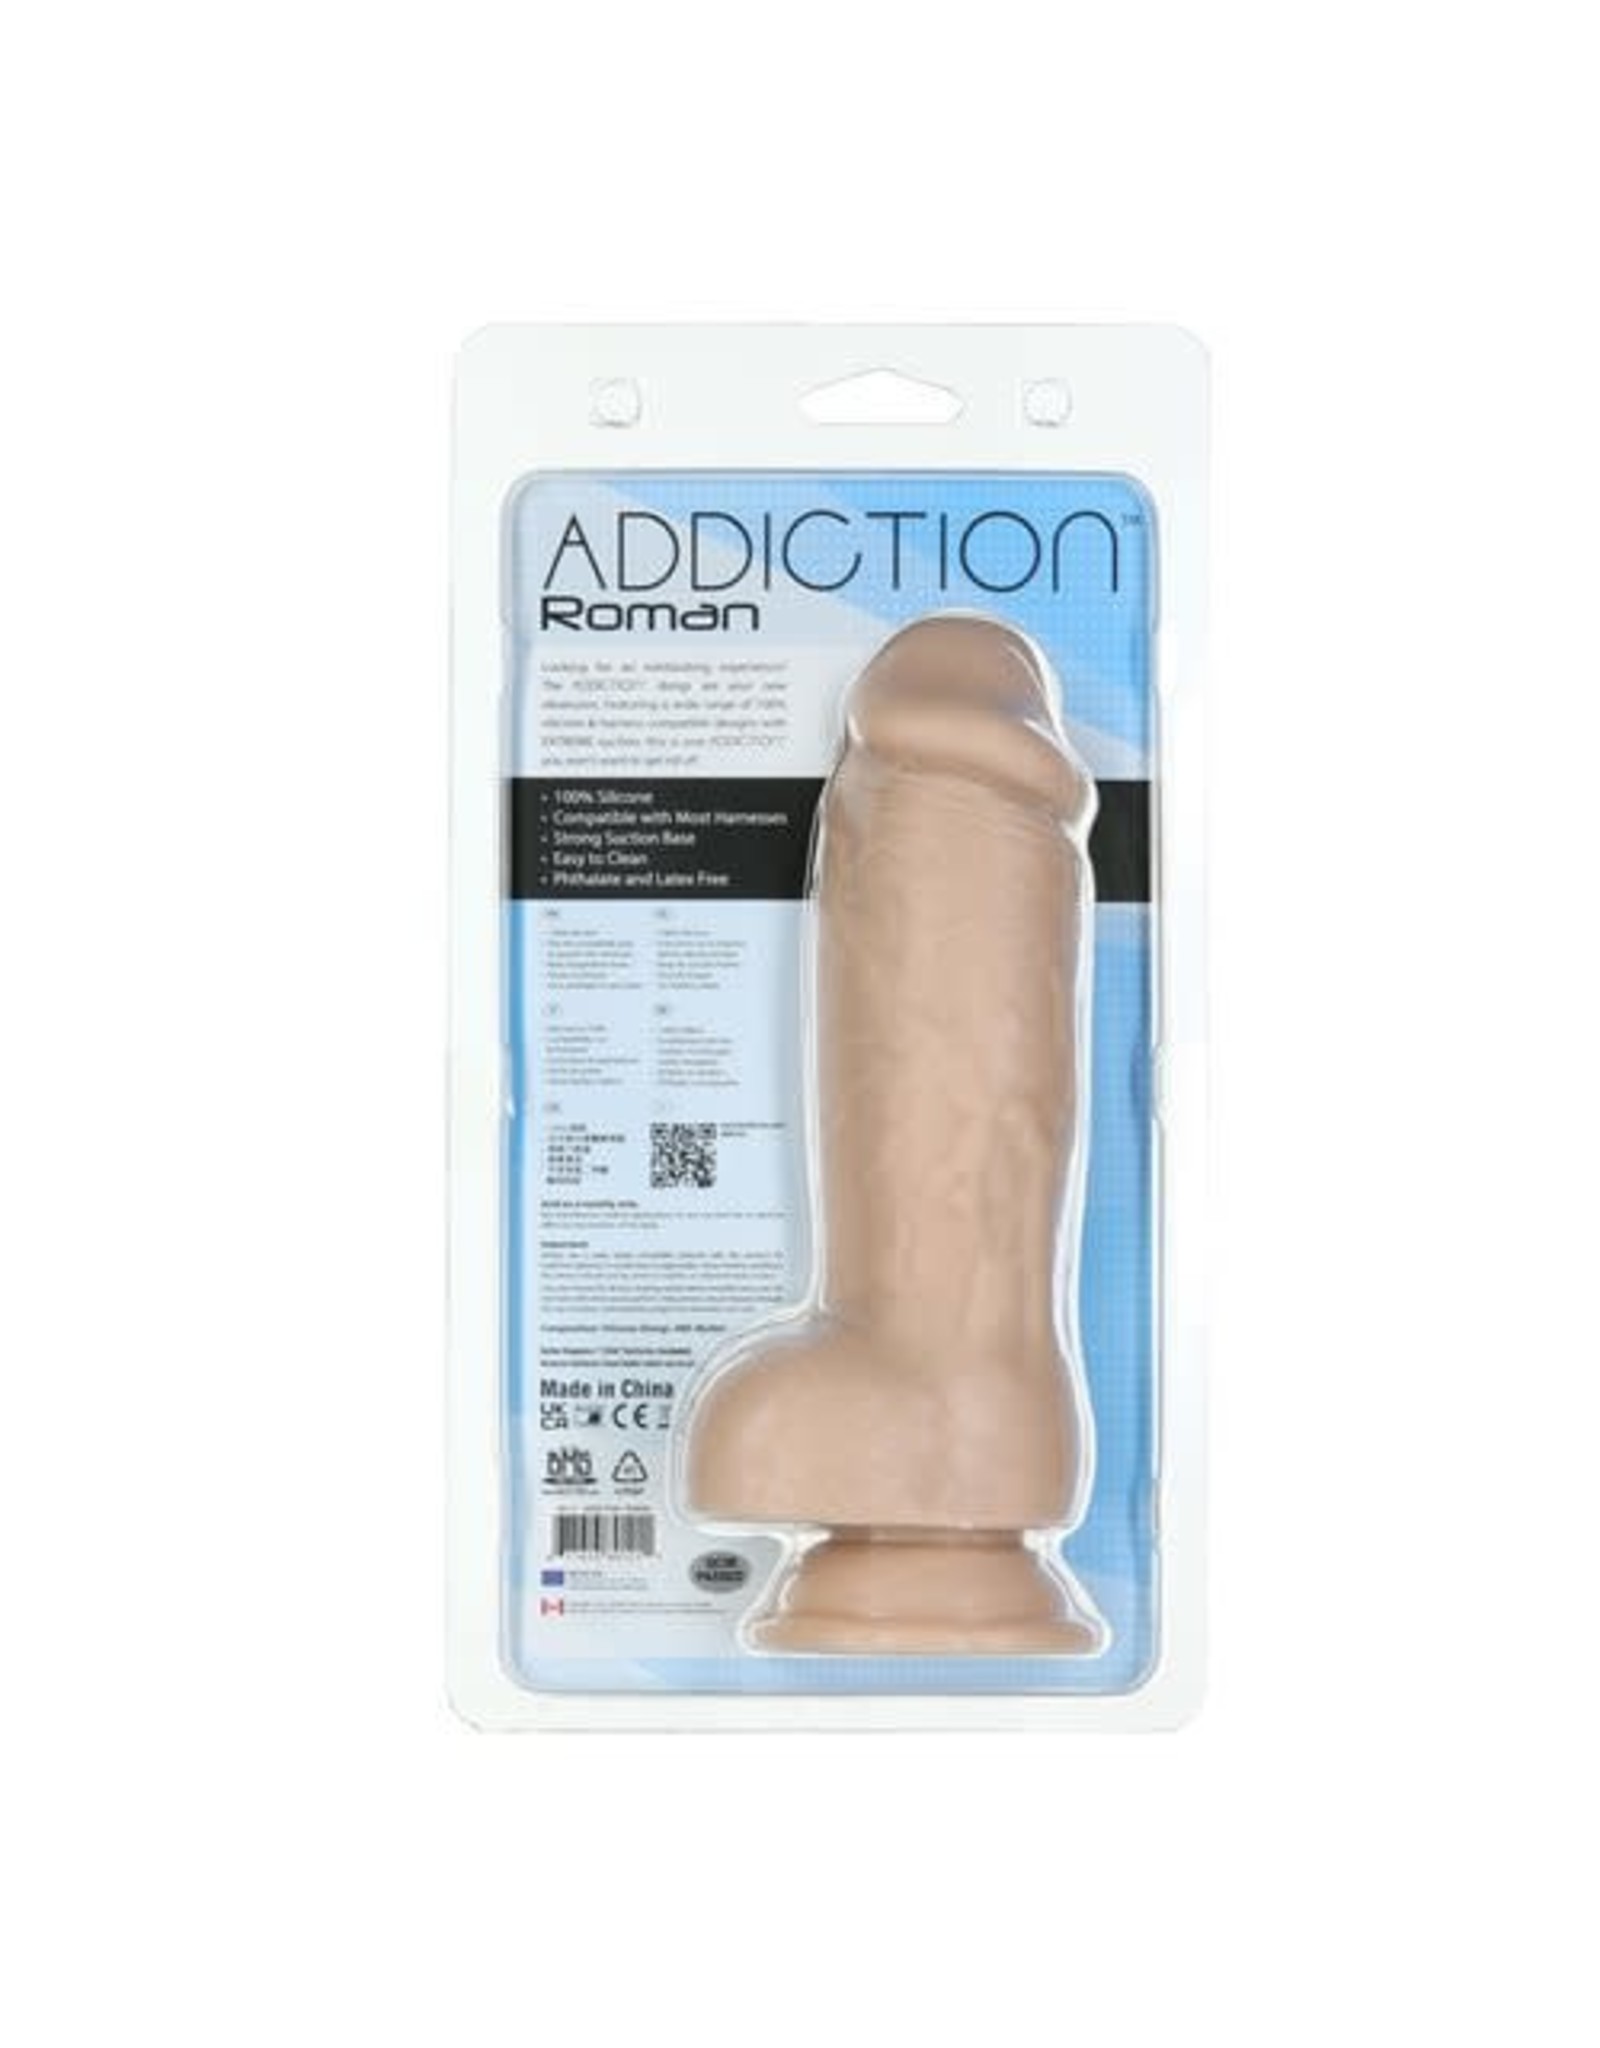 ADDICTION ADDICTION ROMAN - 8" GIRTHY DONG